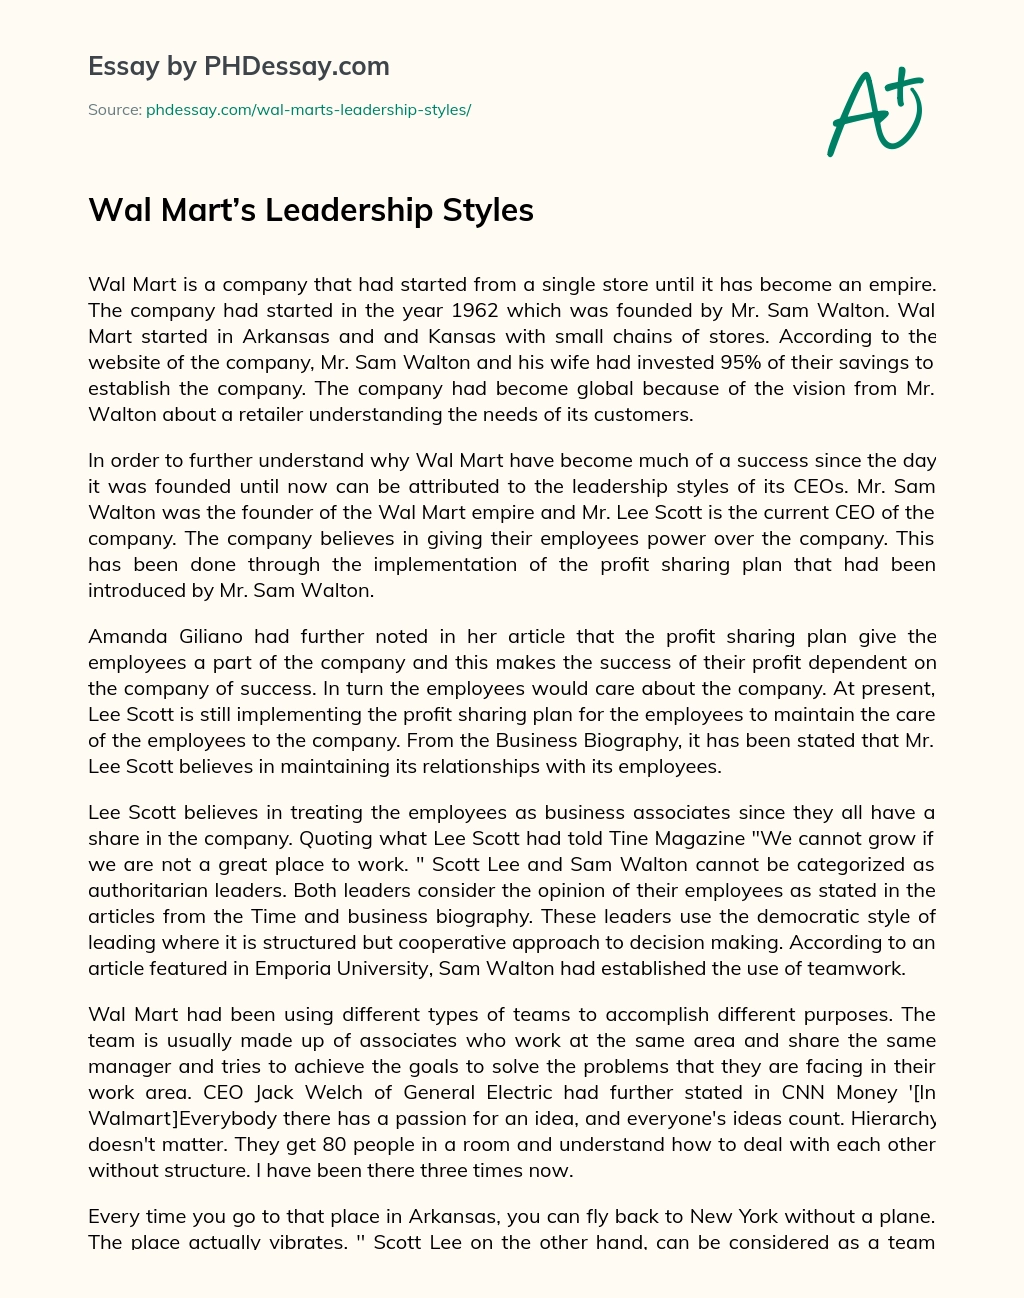 Wal Mart’s Leadership Styles essay